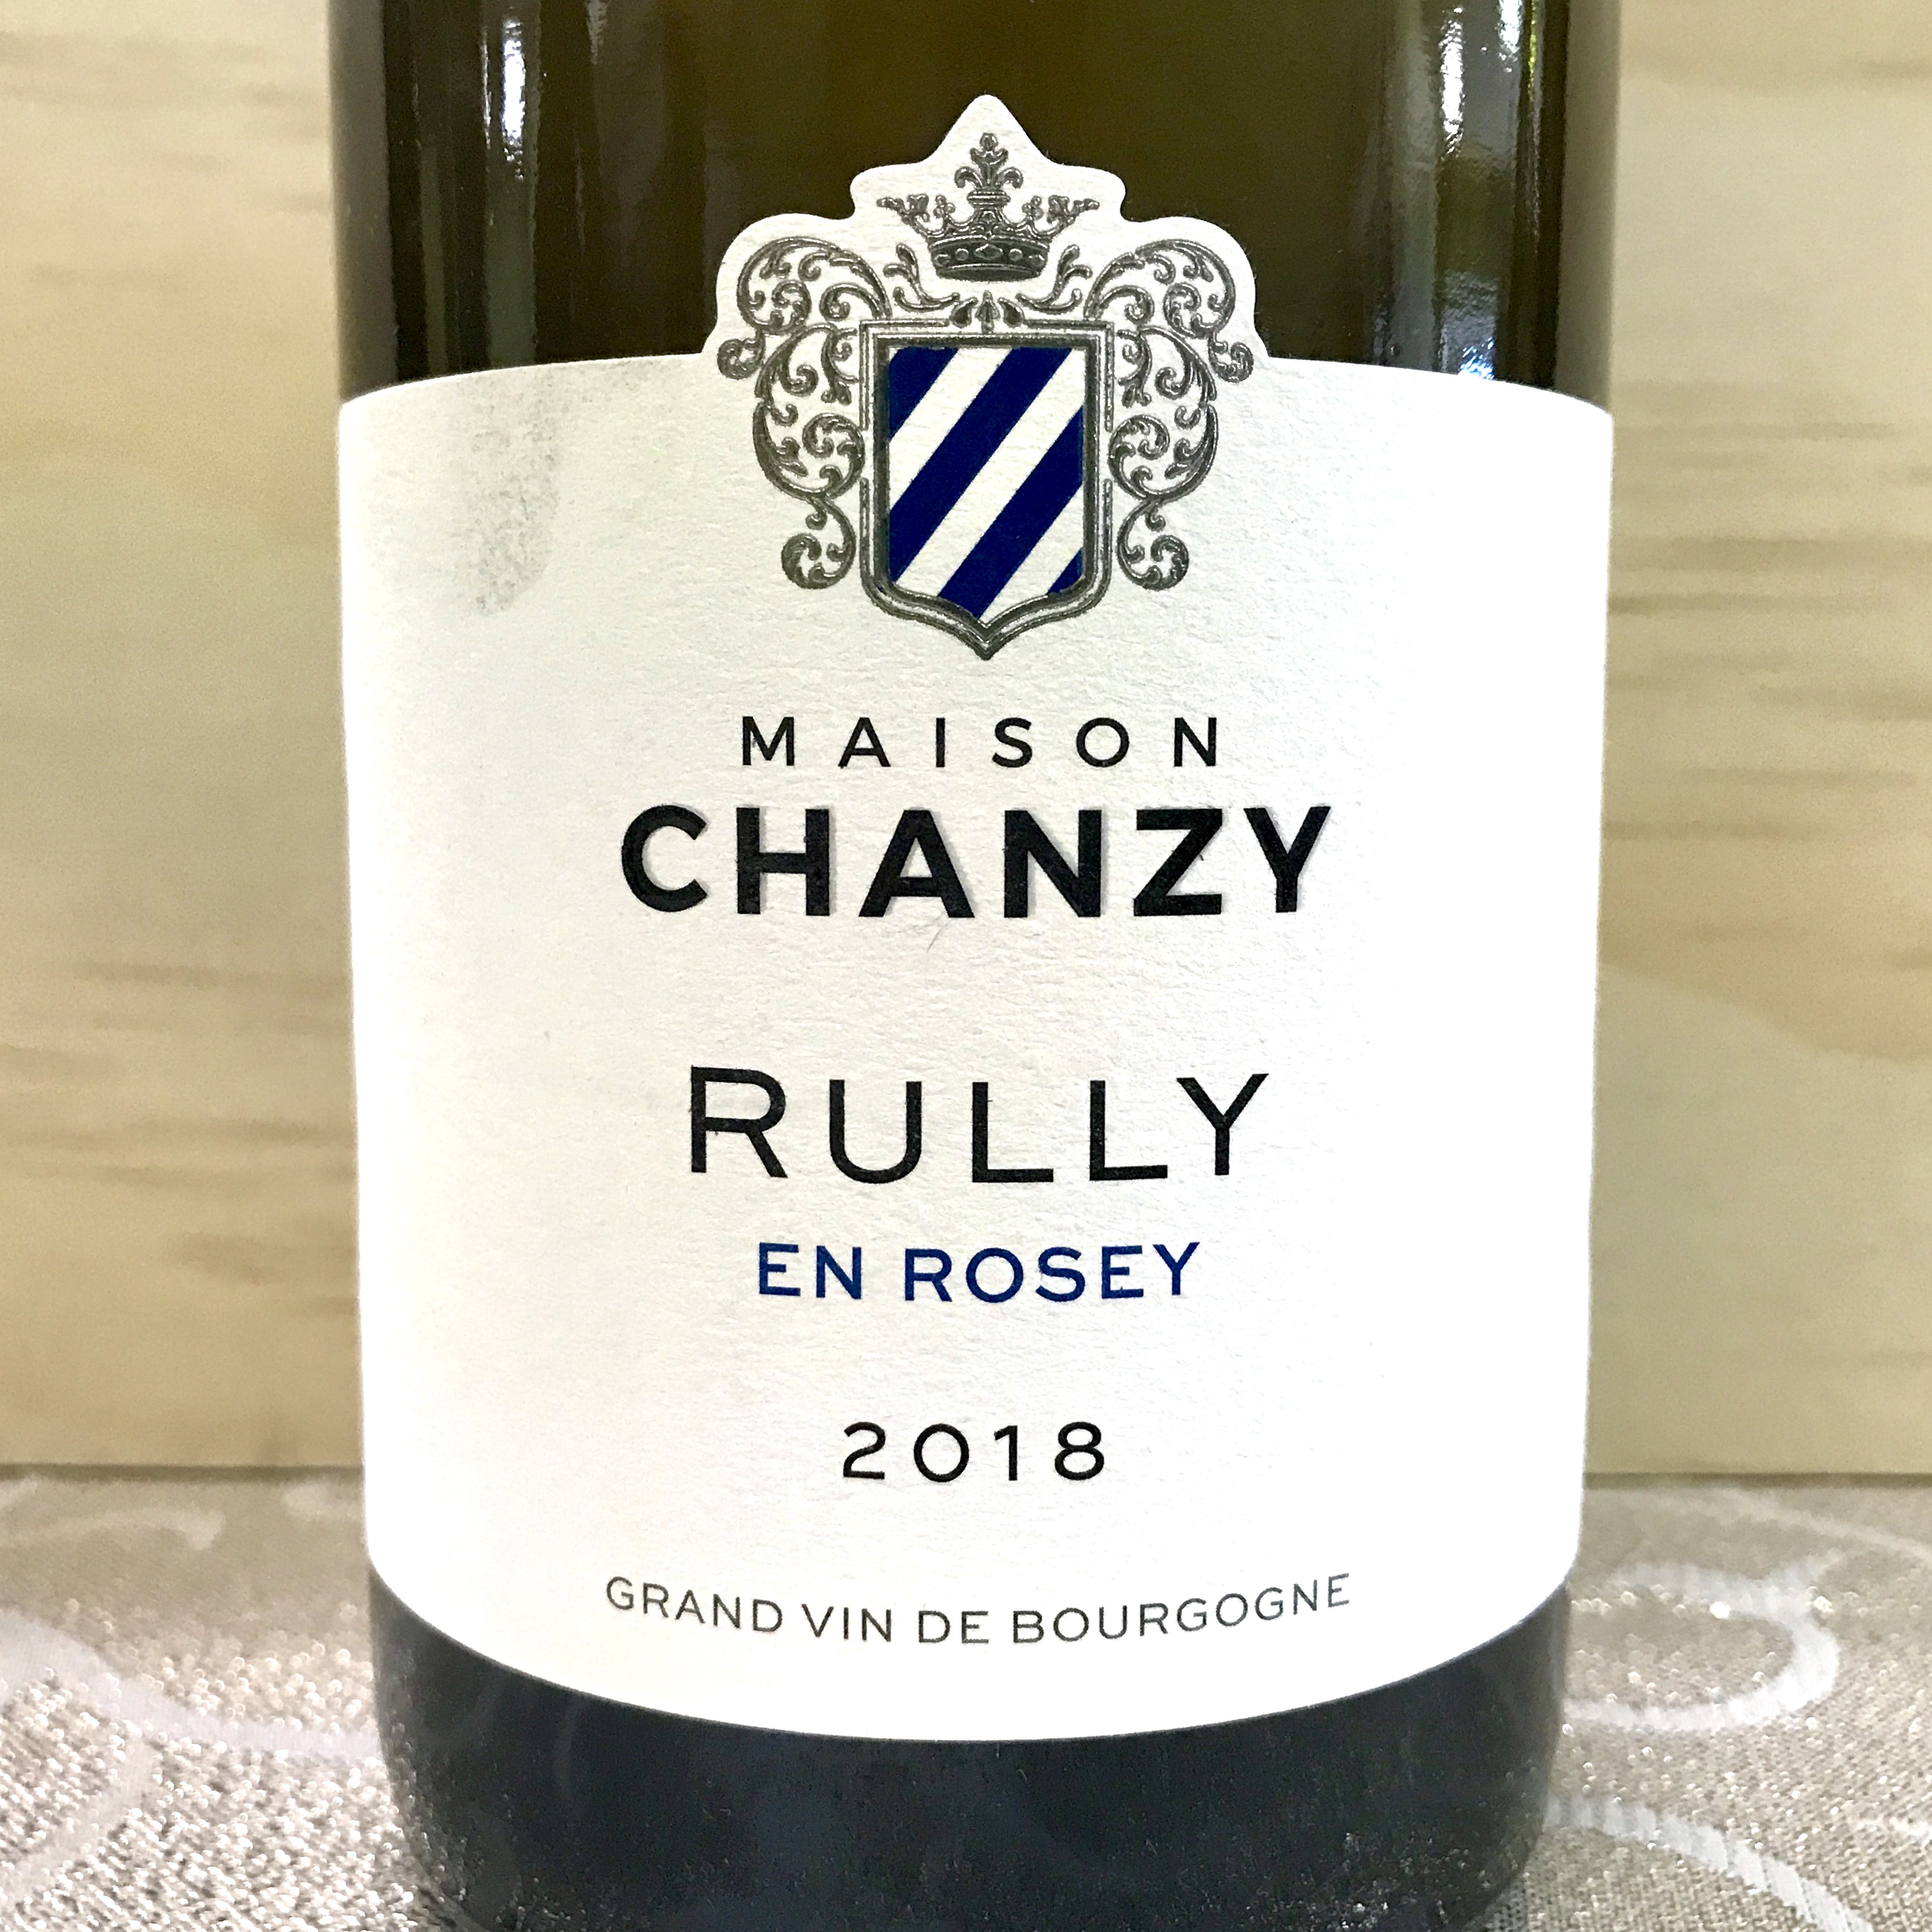 Maison Chanzy Rully En Rosey 2018